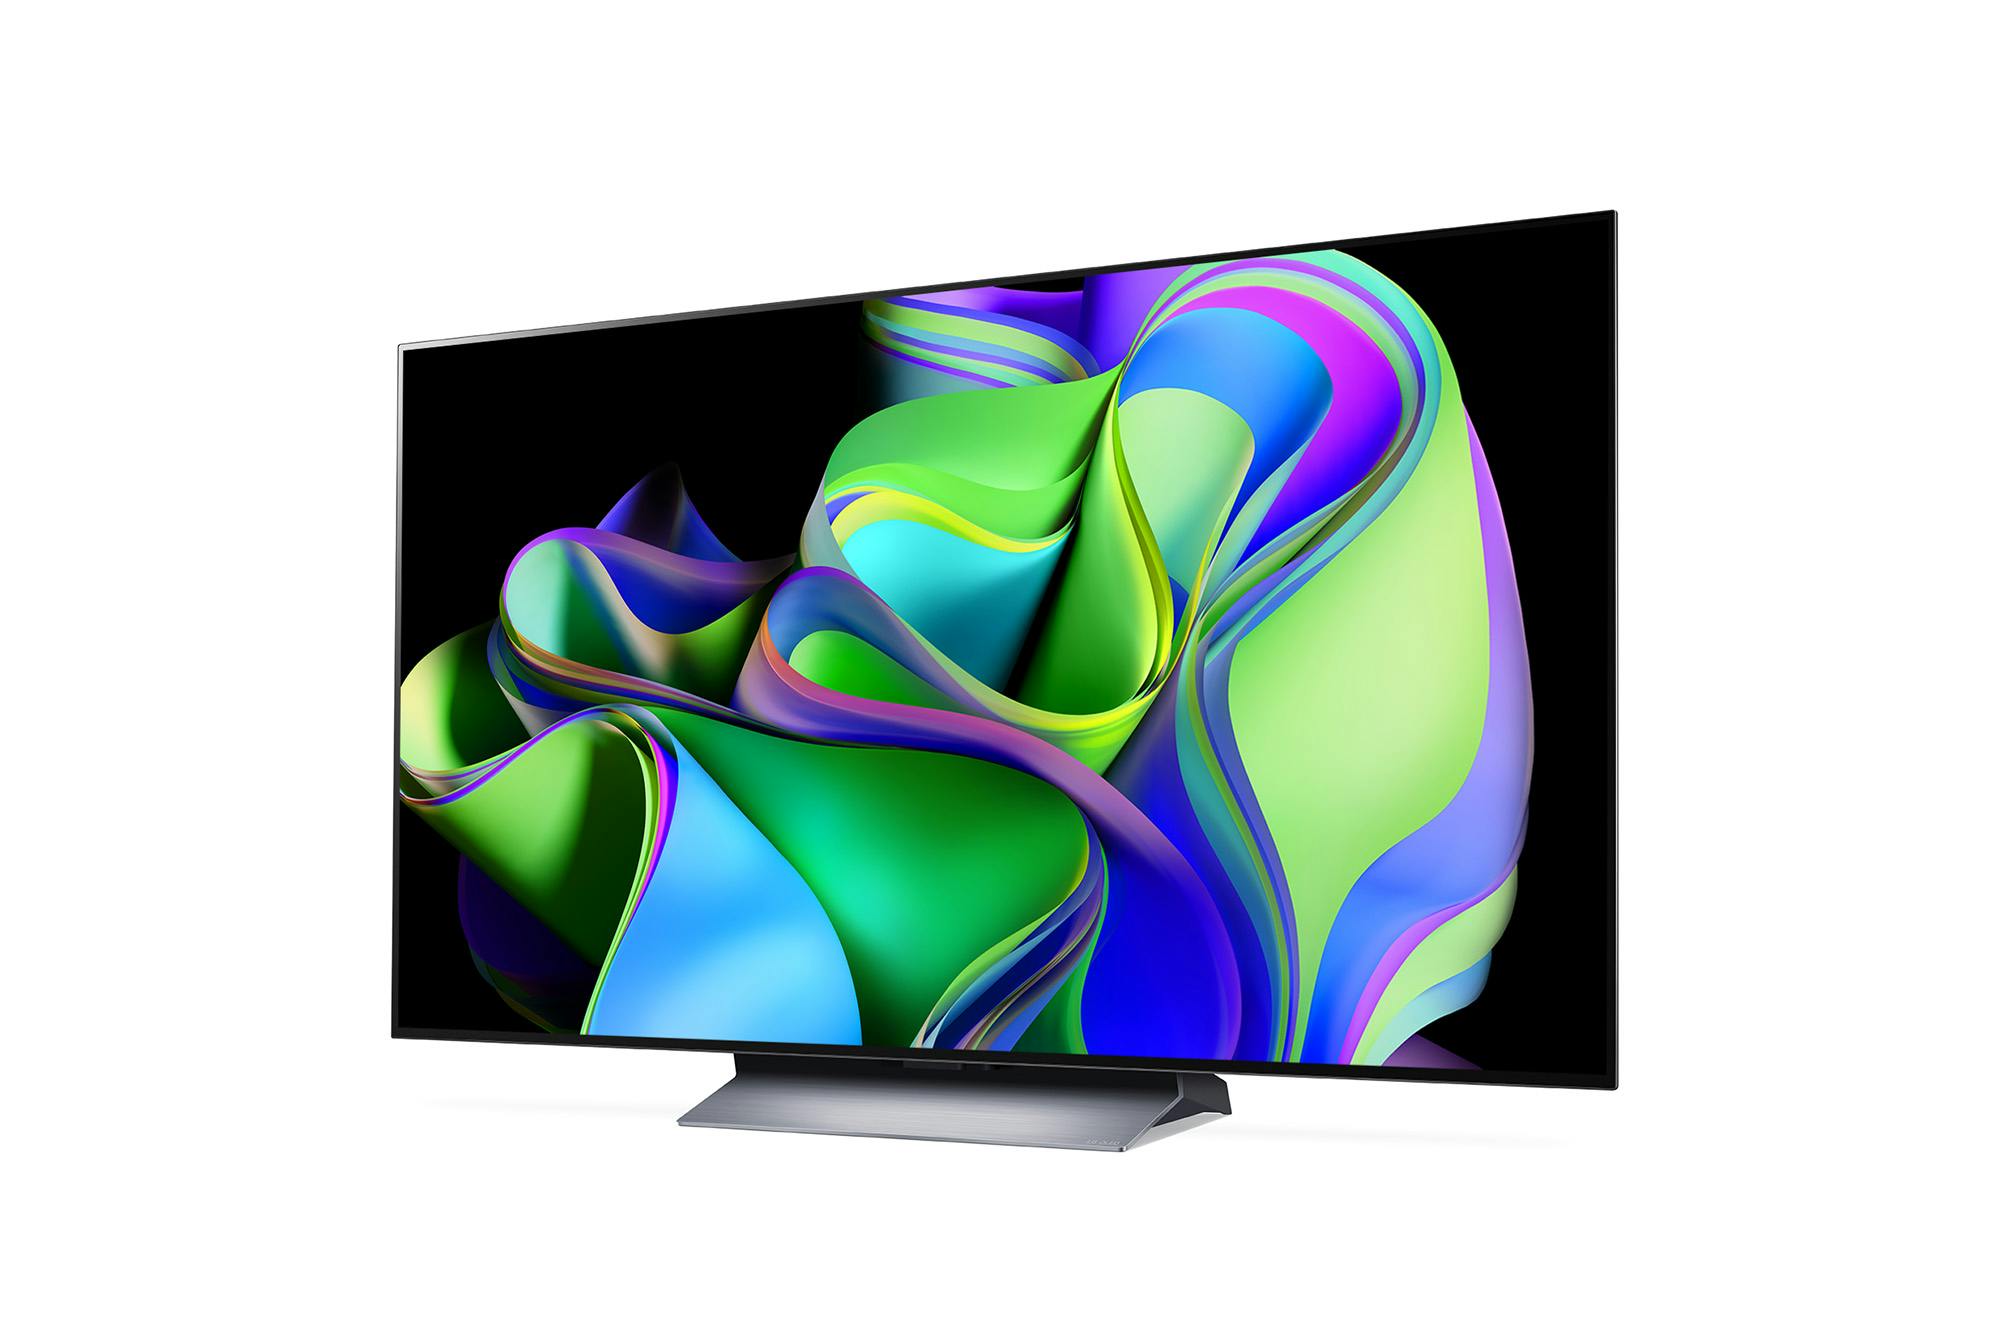 LG OLED evo C3 55-inch 4K UHD Smart TV (2023) OLED55C3PSA